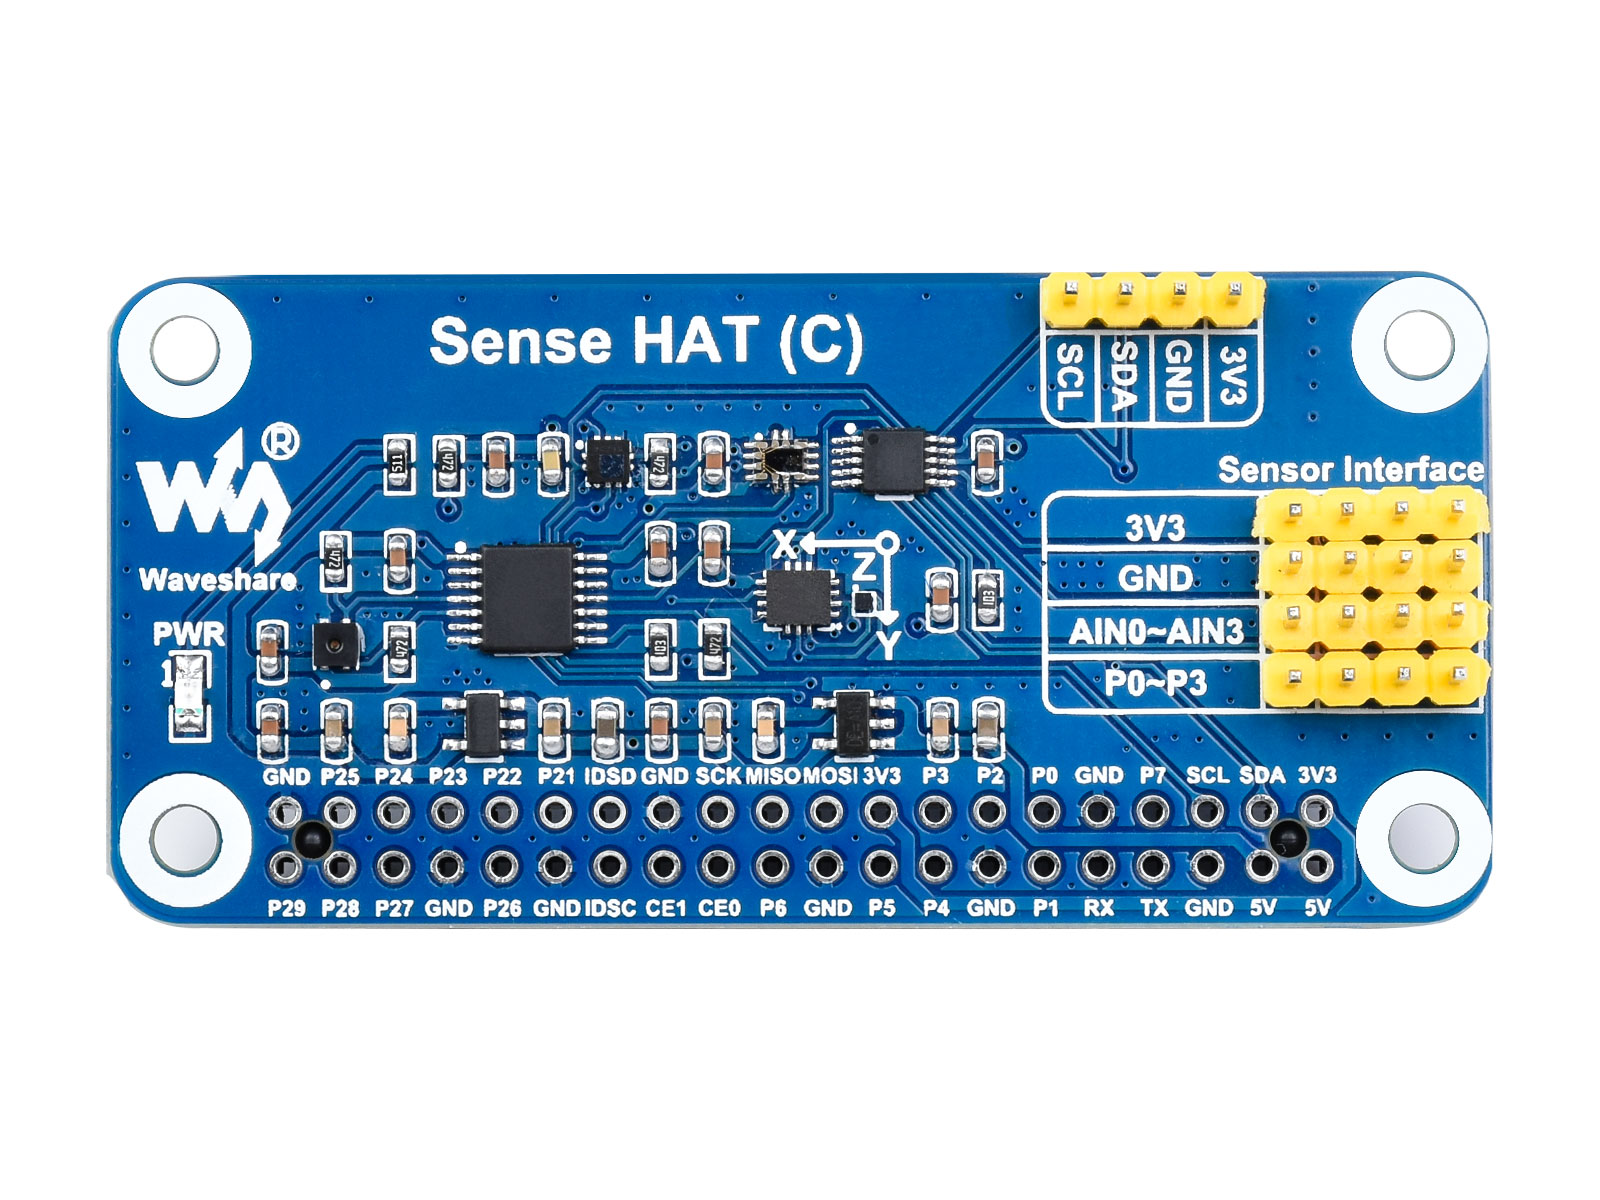 Sense HAT (C) for Raspberry Pi, Onboard Multi Powerful Sensors, Supports External Sensors